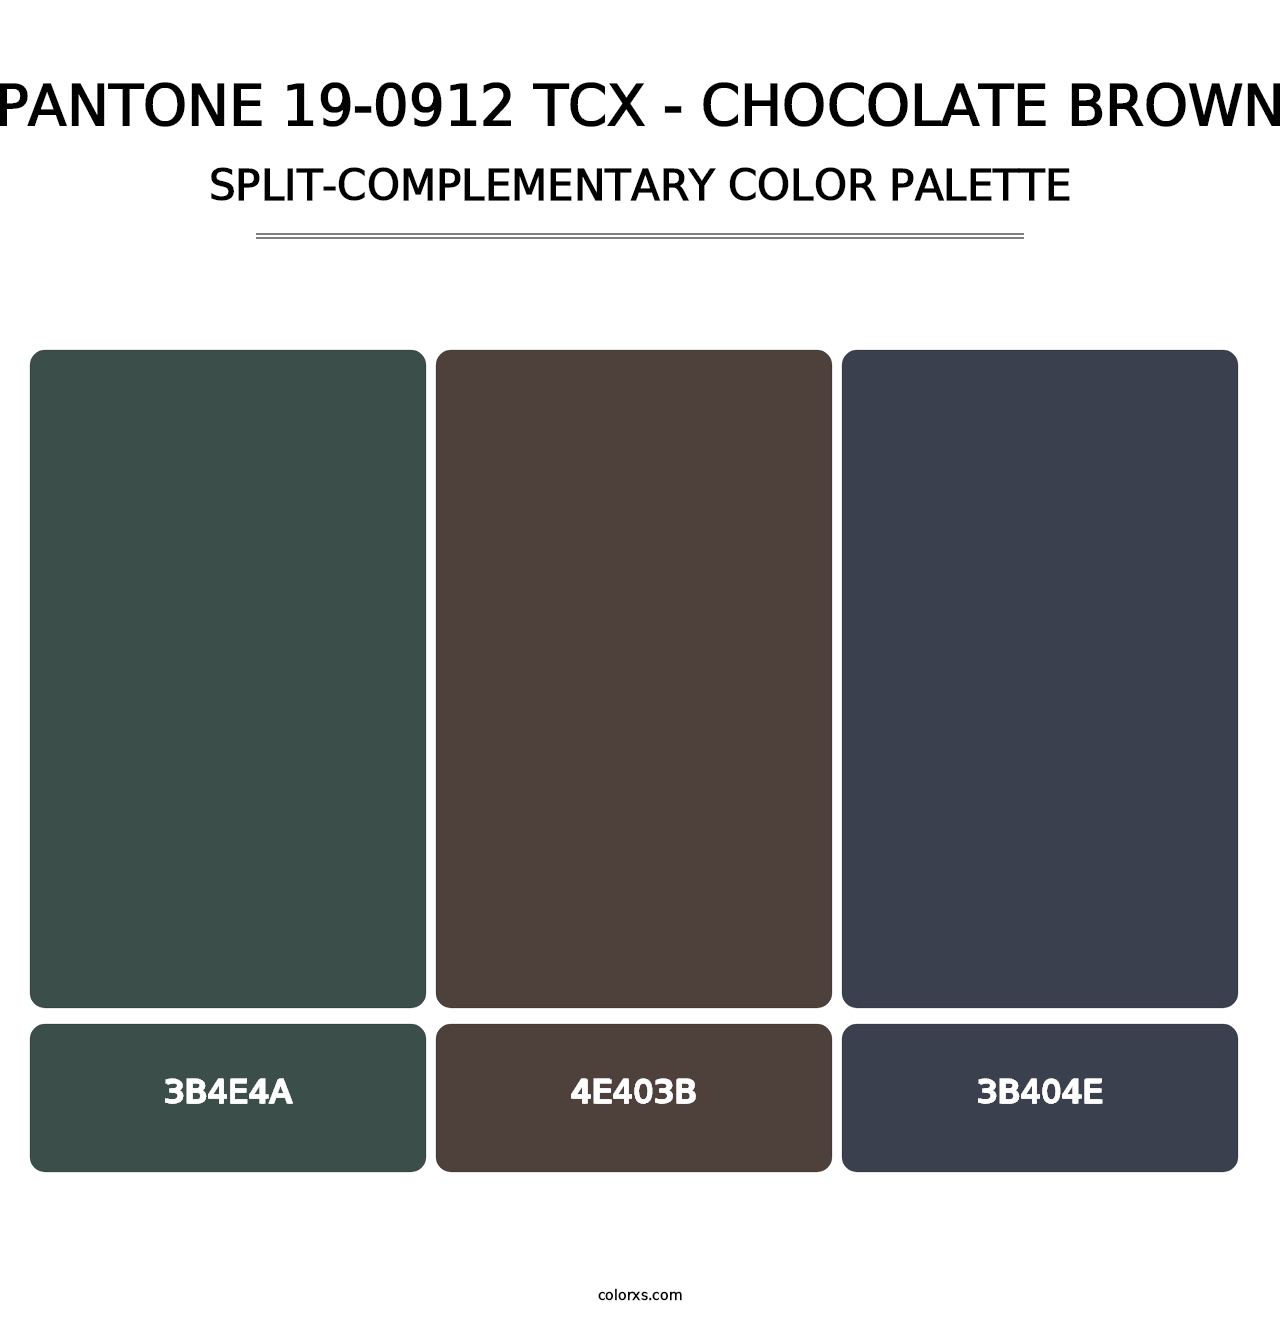 PANTONE 19-0912 TCX - Chocolate Brown - Split-Complementary Color Palette